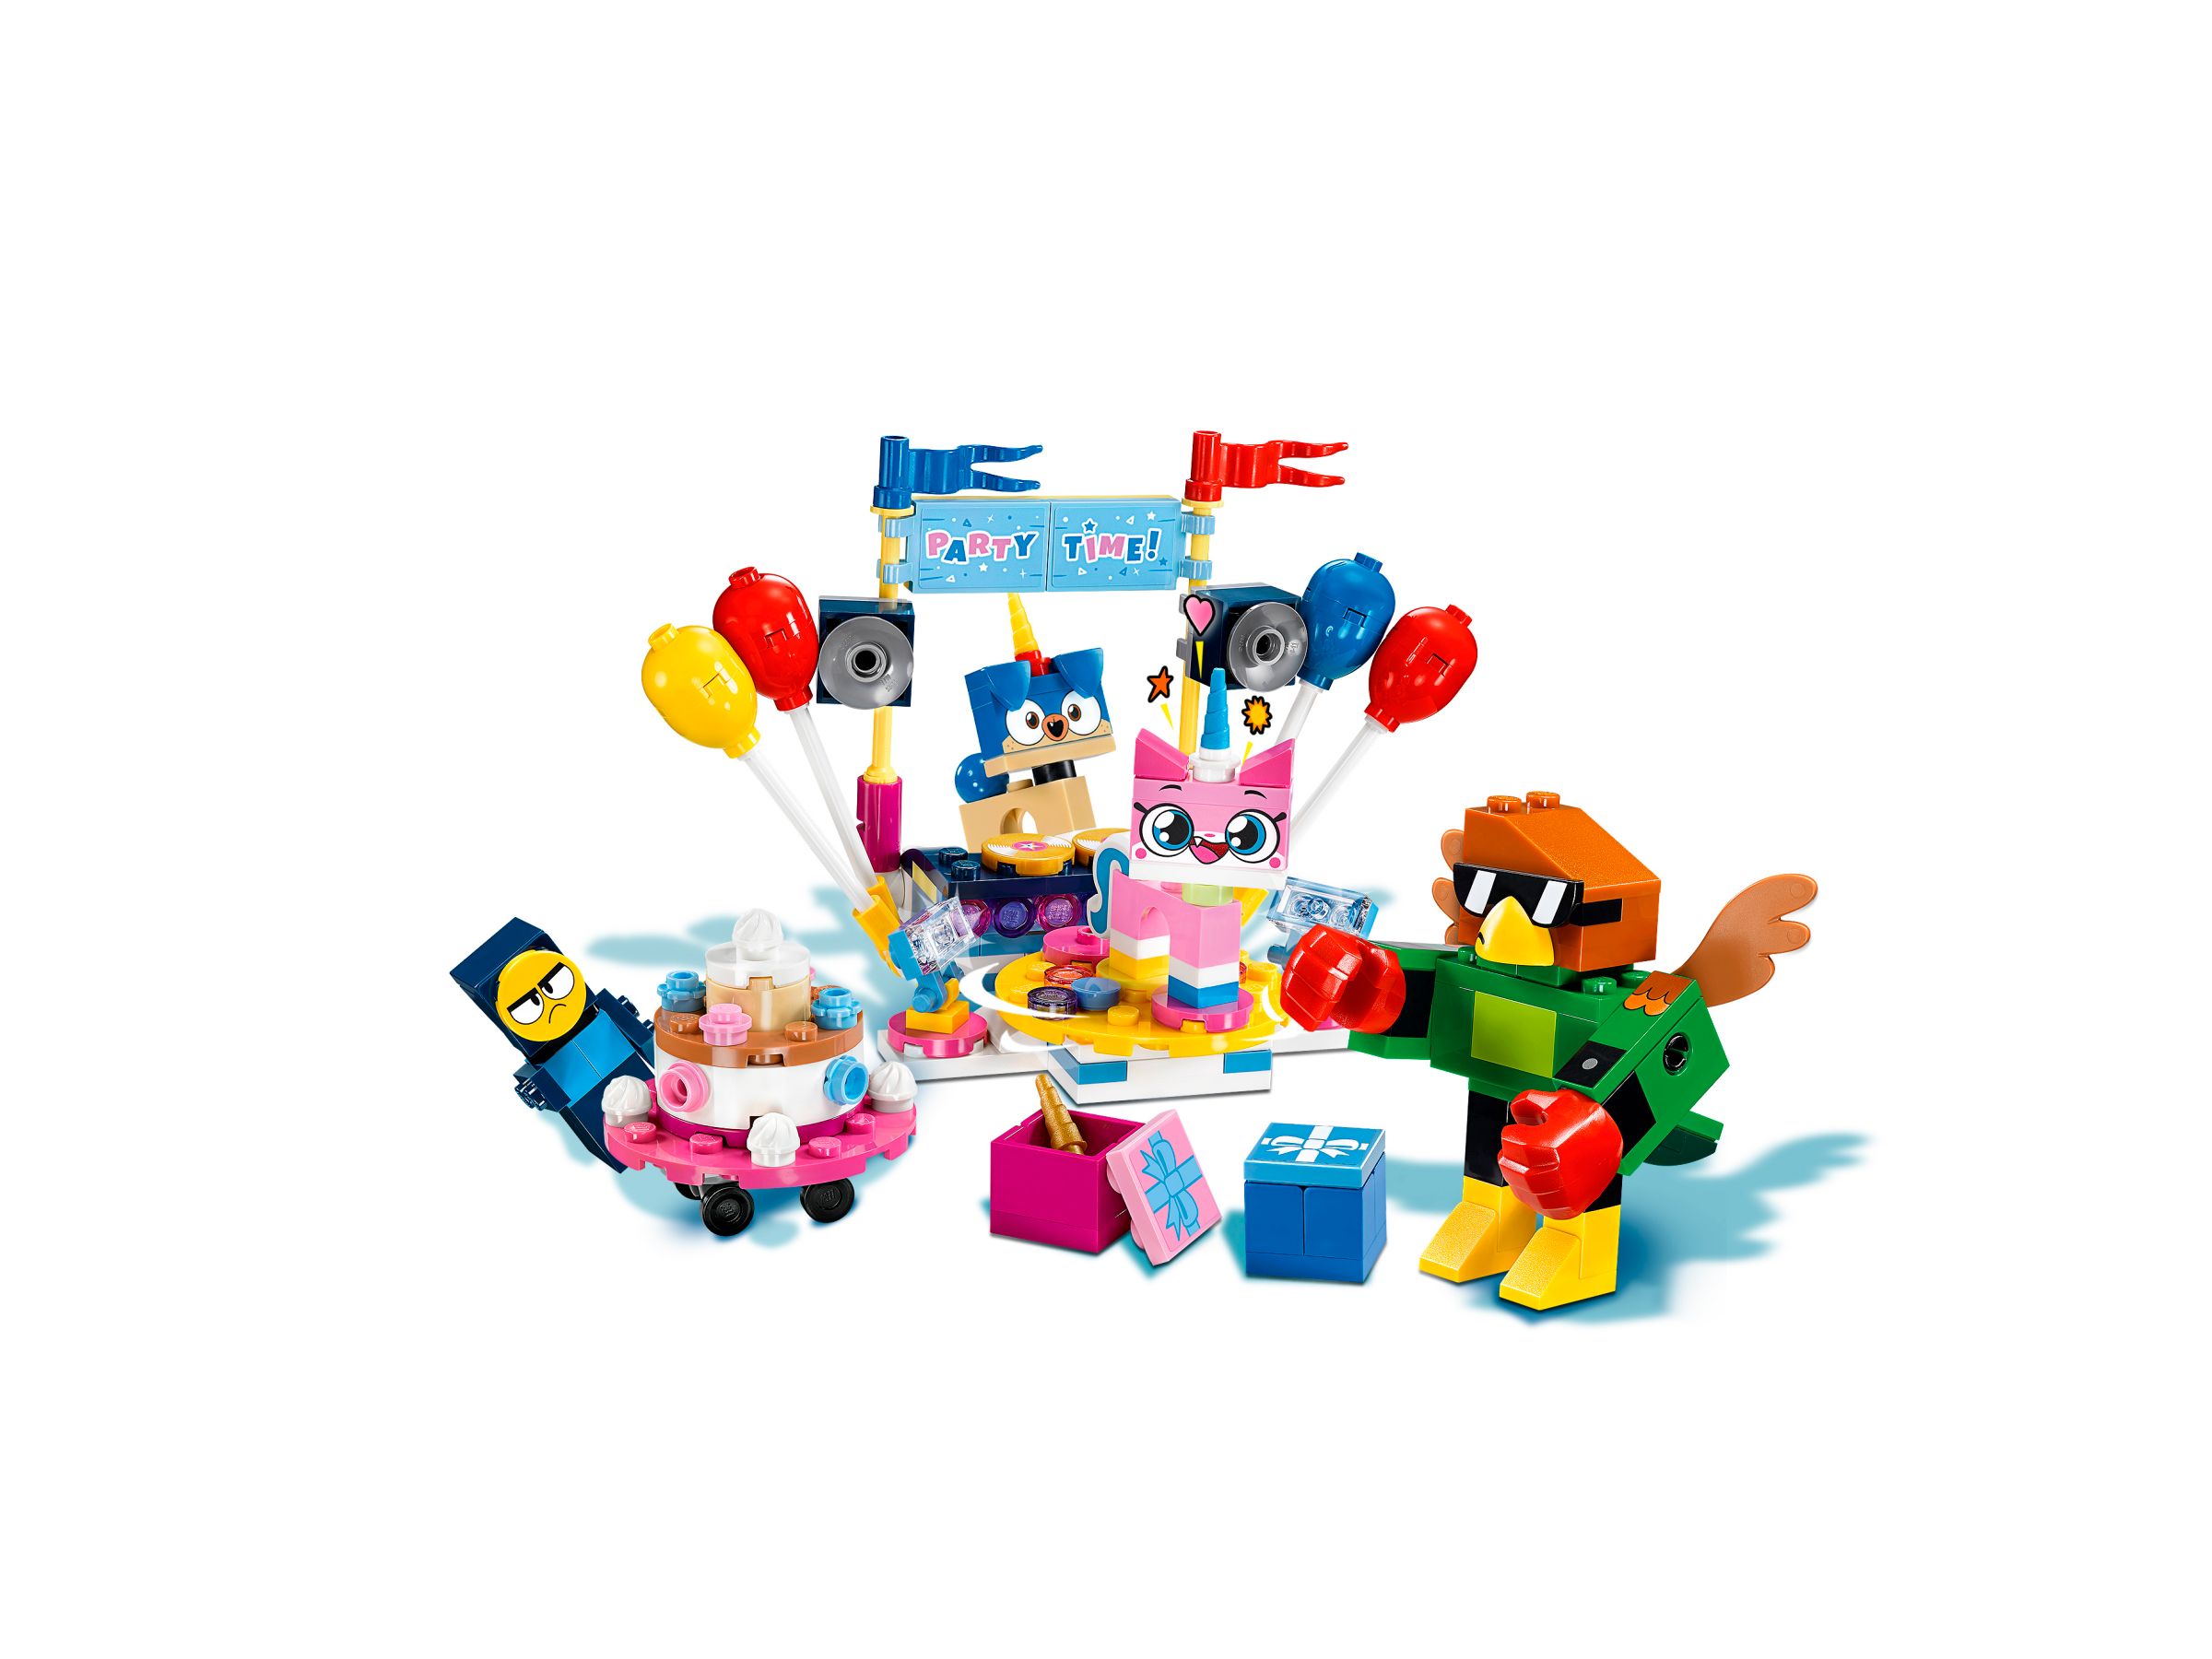 LEGO Unikitty! 41453 Partyspaß LEGO_41453_alt2.jpg